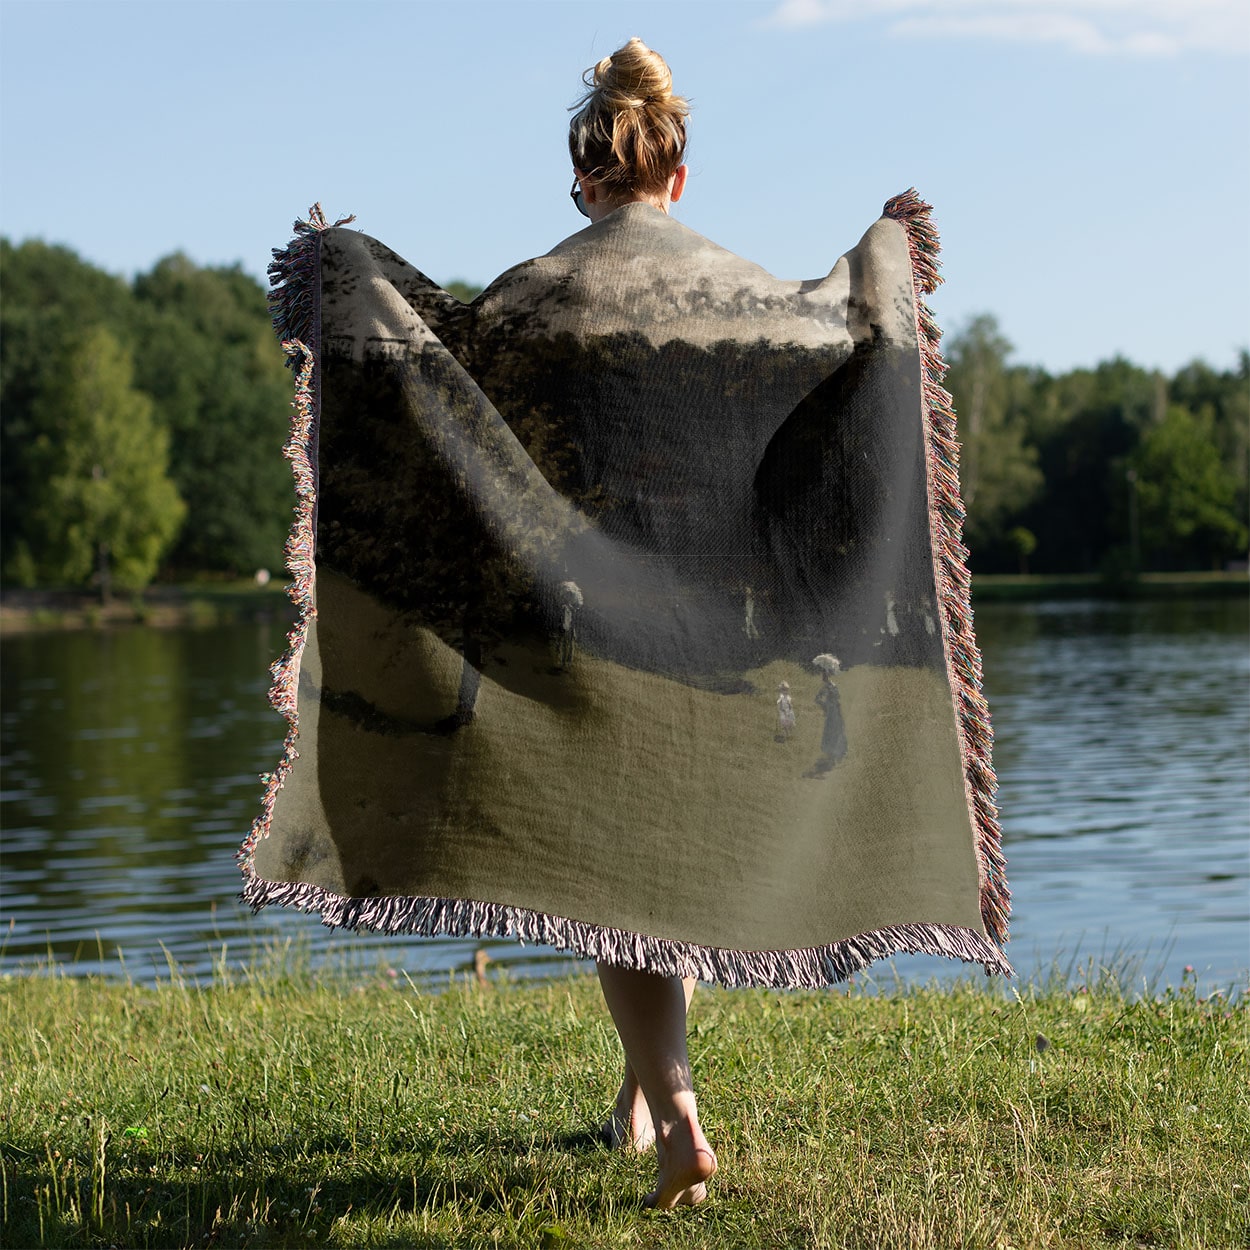 Sage Green Landscape Woven Blanket Held on a Woman's Back Outside